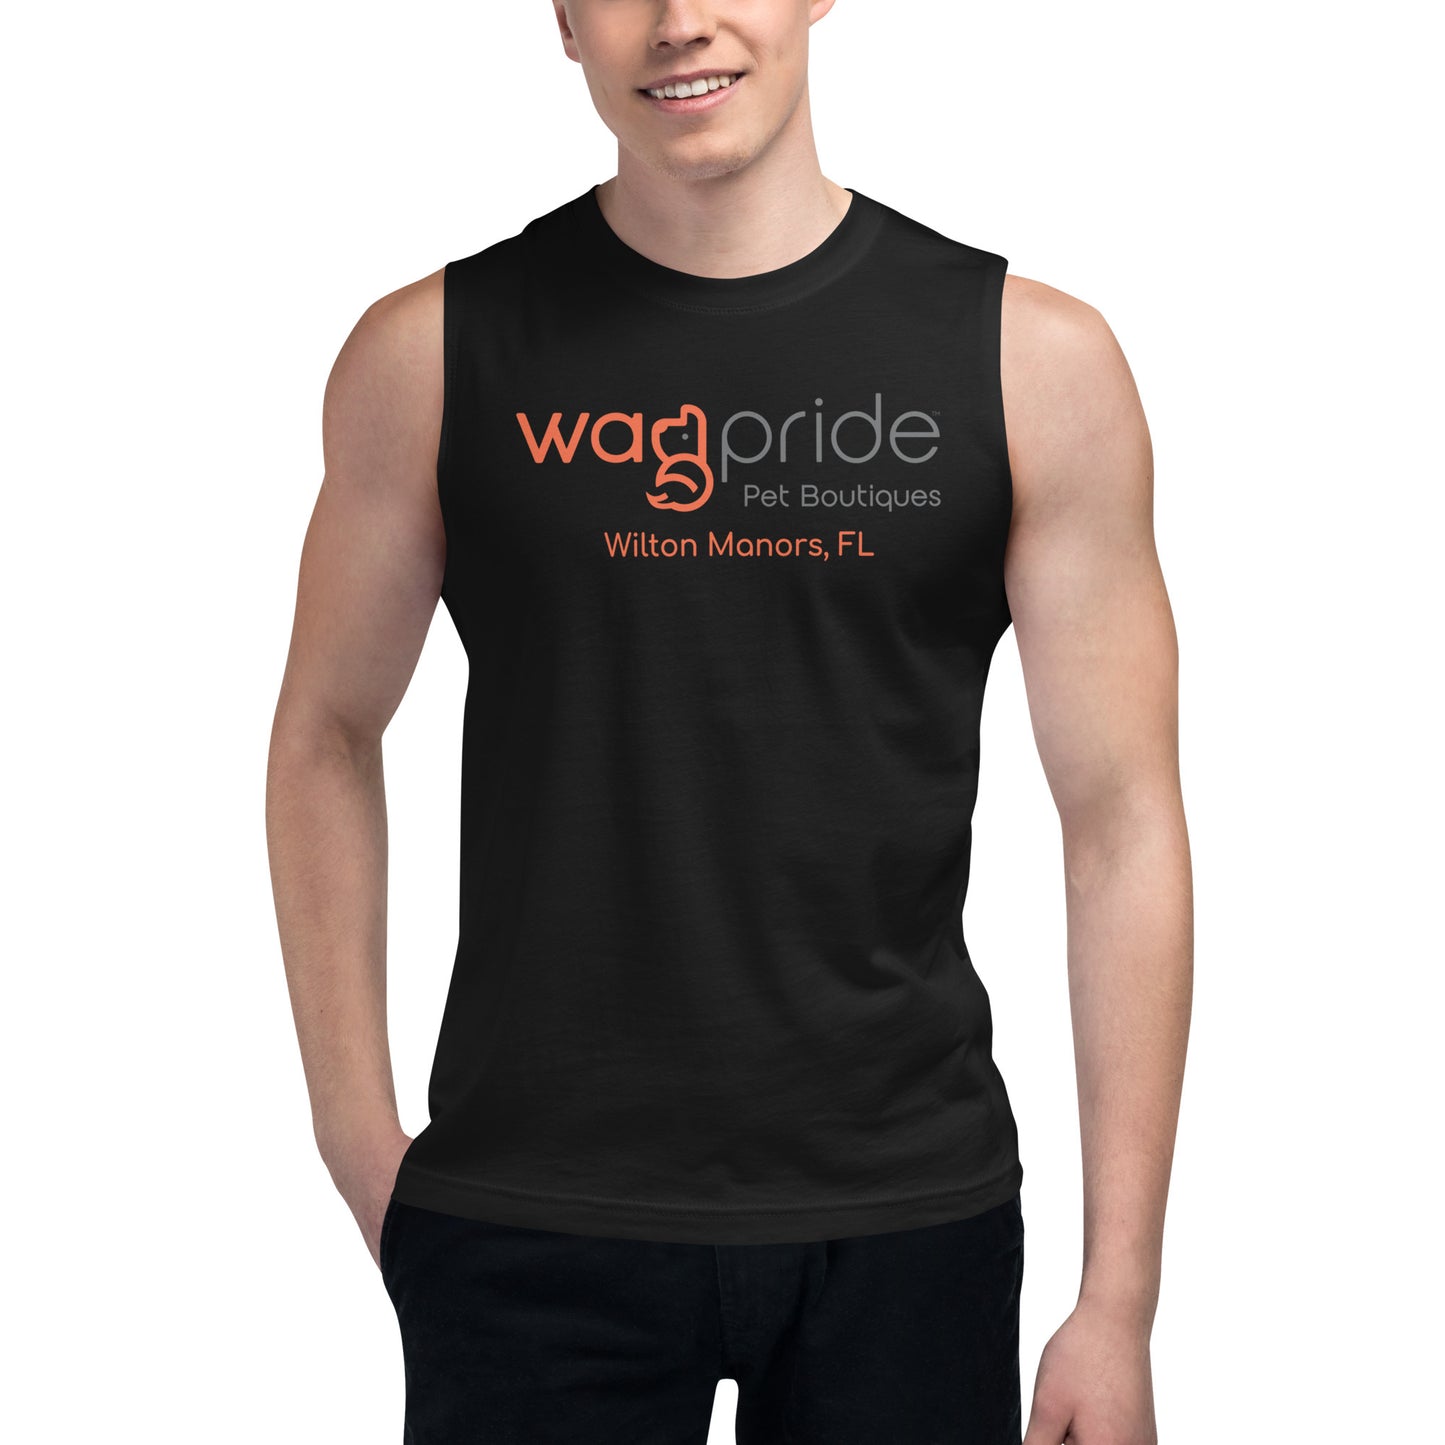 Wagpride Wilton Manors Muscle Shirt Size M